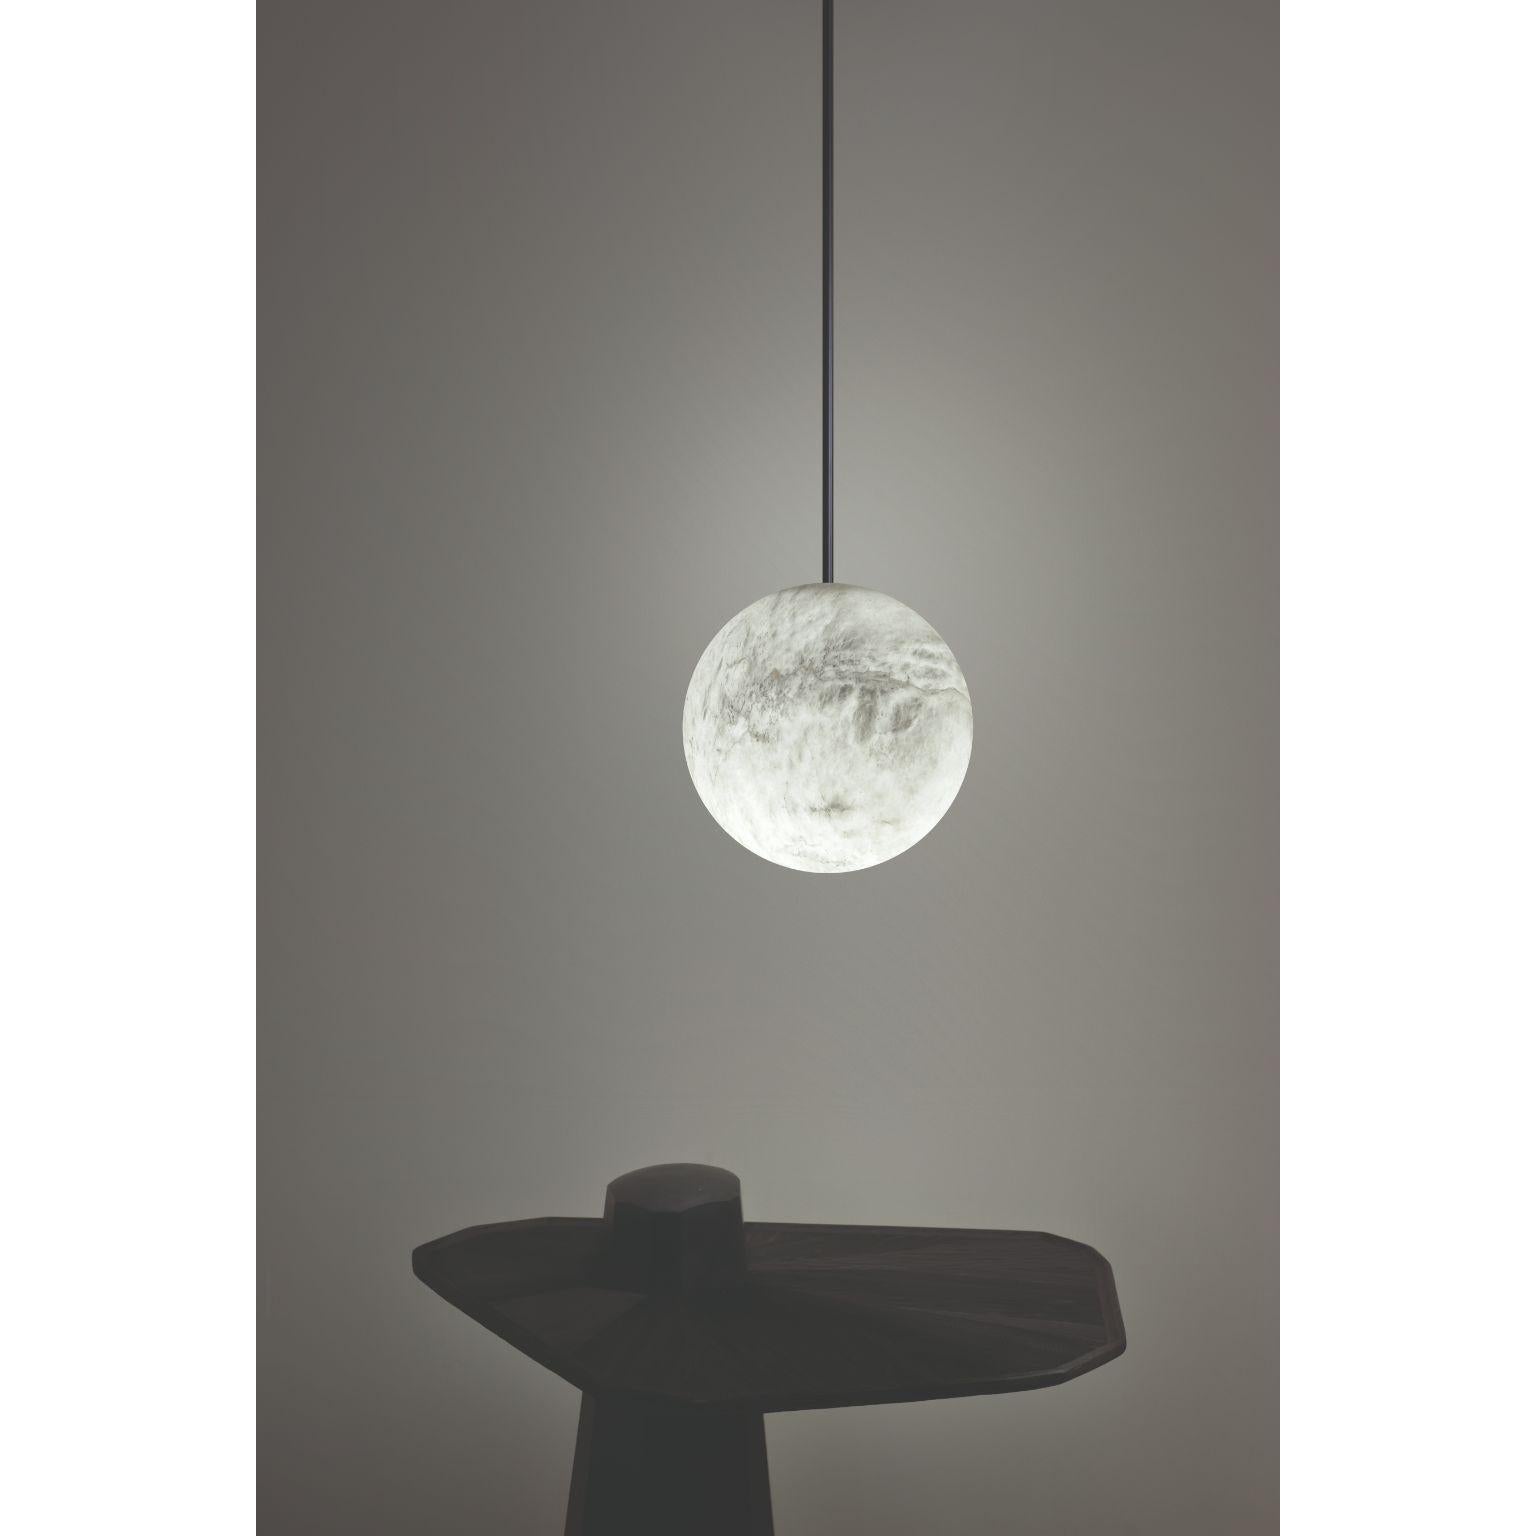 Alabaster Luna pendant light by Atelier Alain Ellouz
Collection Atelier 
Atelier Alain Ellouz
Dimensions: Ø 19.7